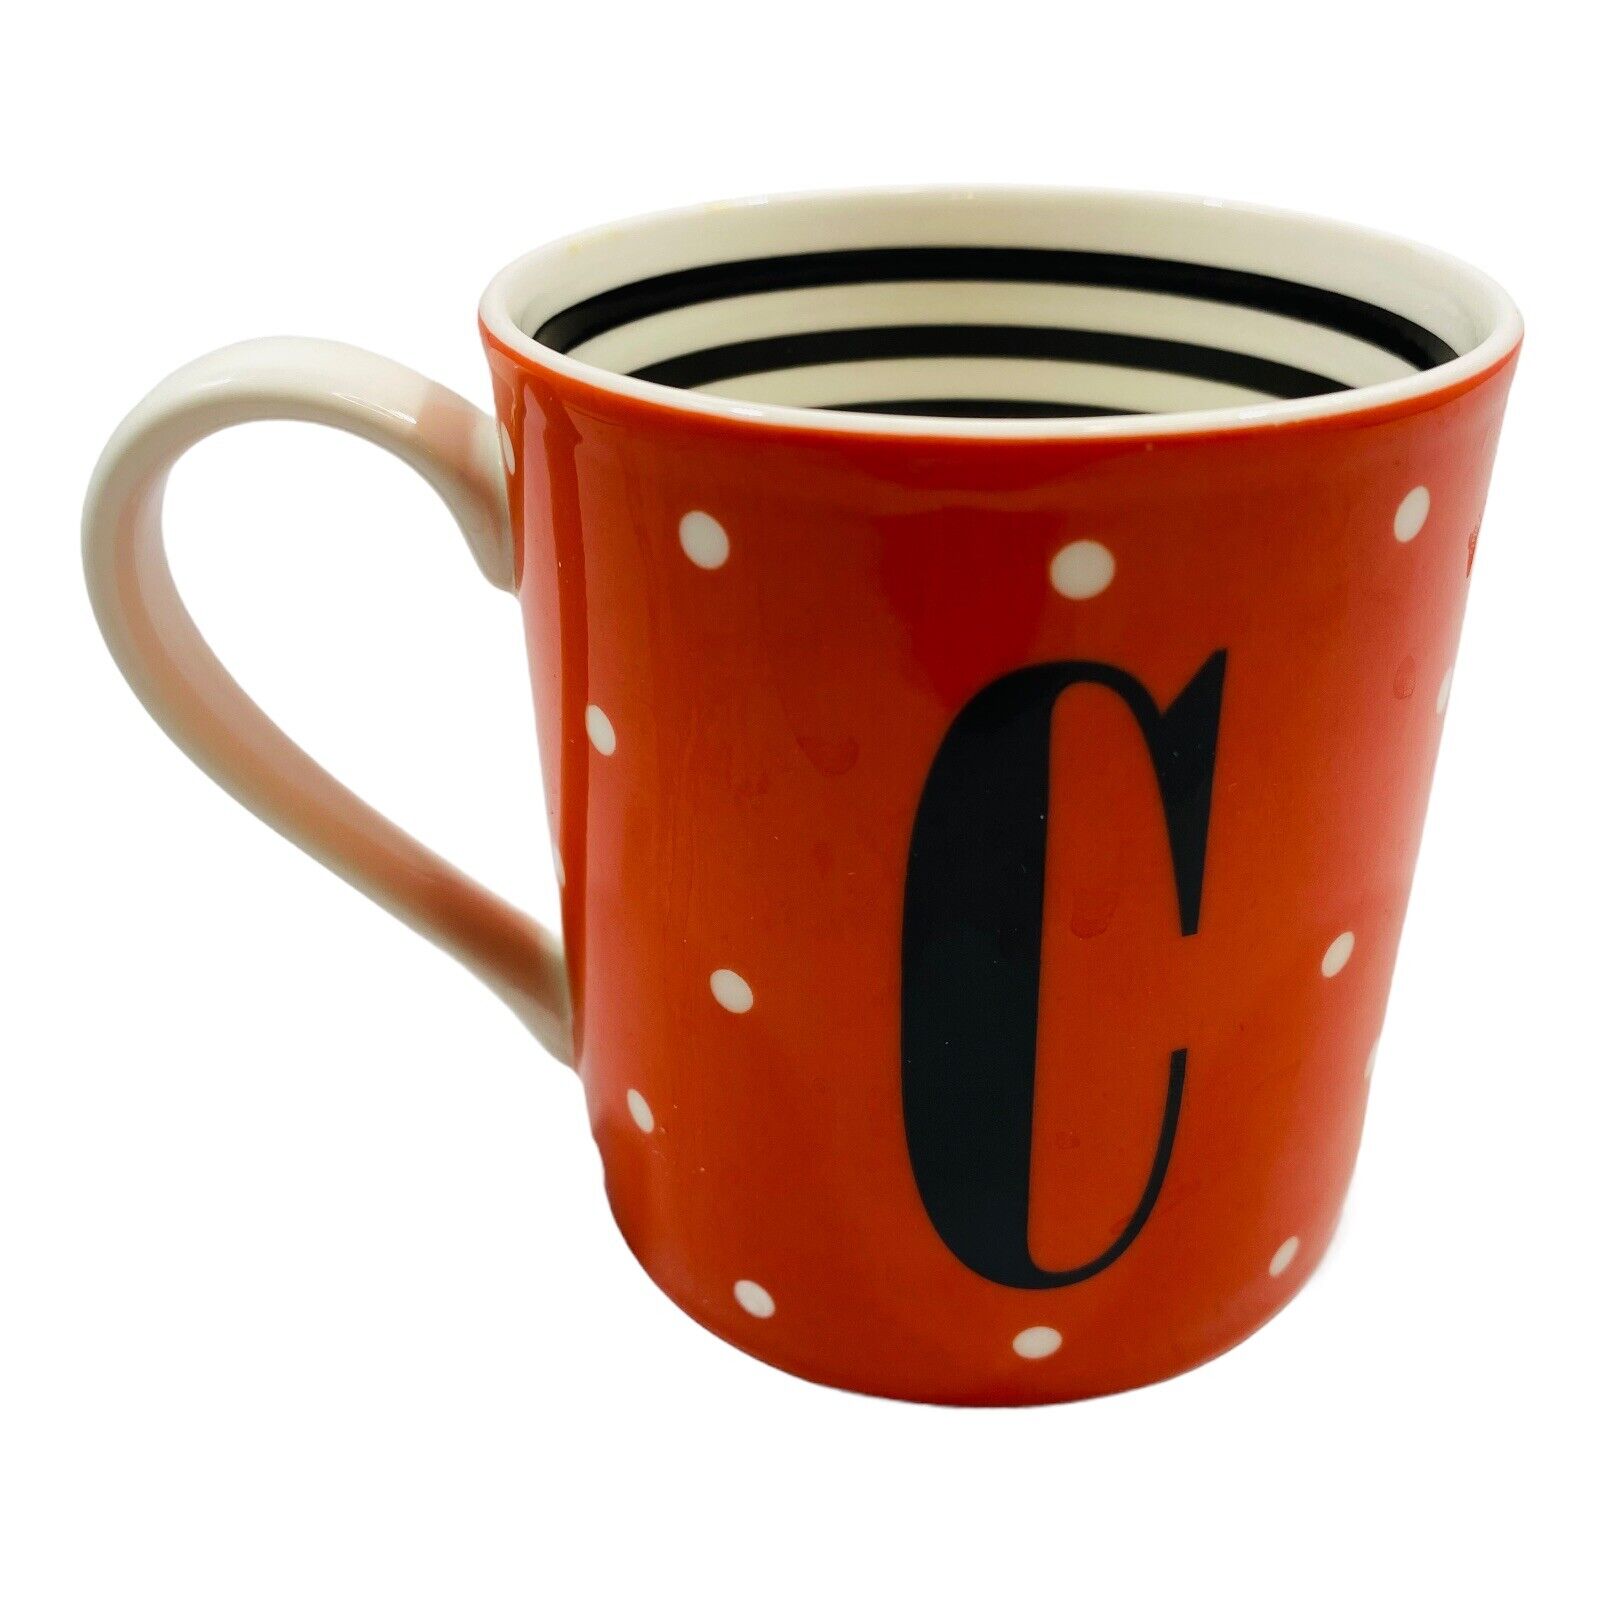 Lenox KATE SPADE Monogram Mug “C” To The Letter Orange Black Coffee Cup